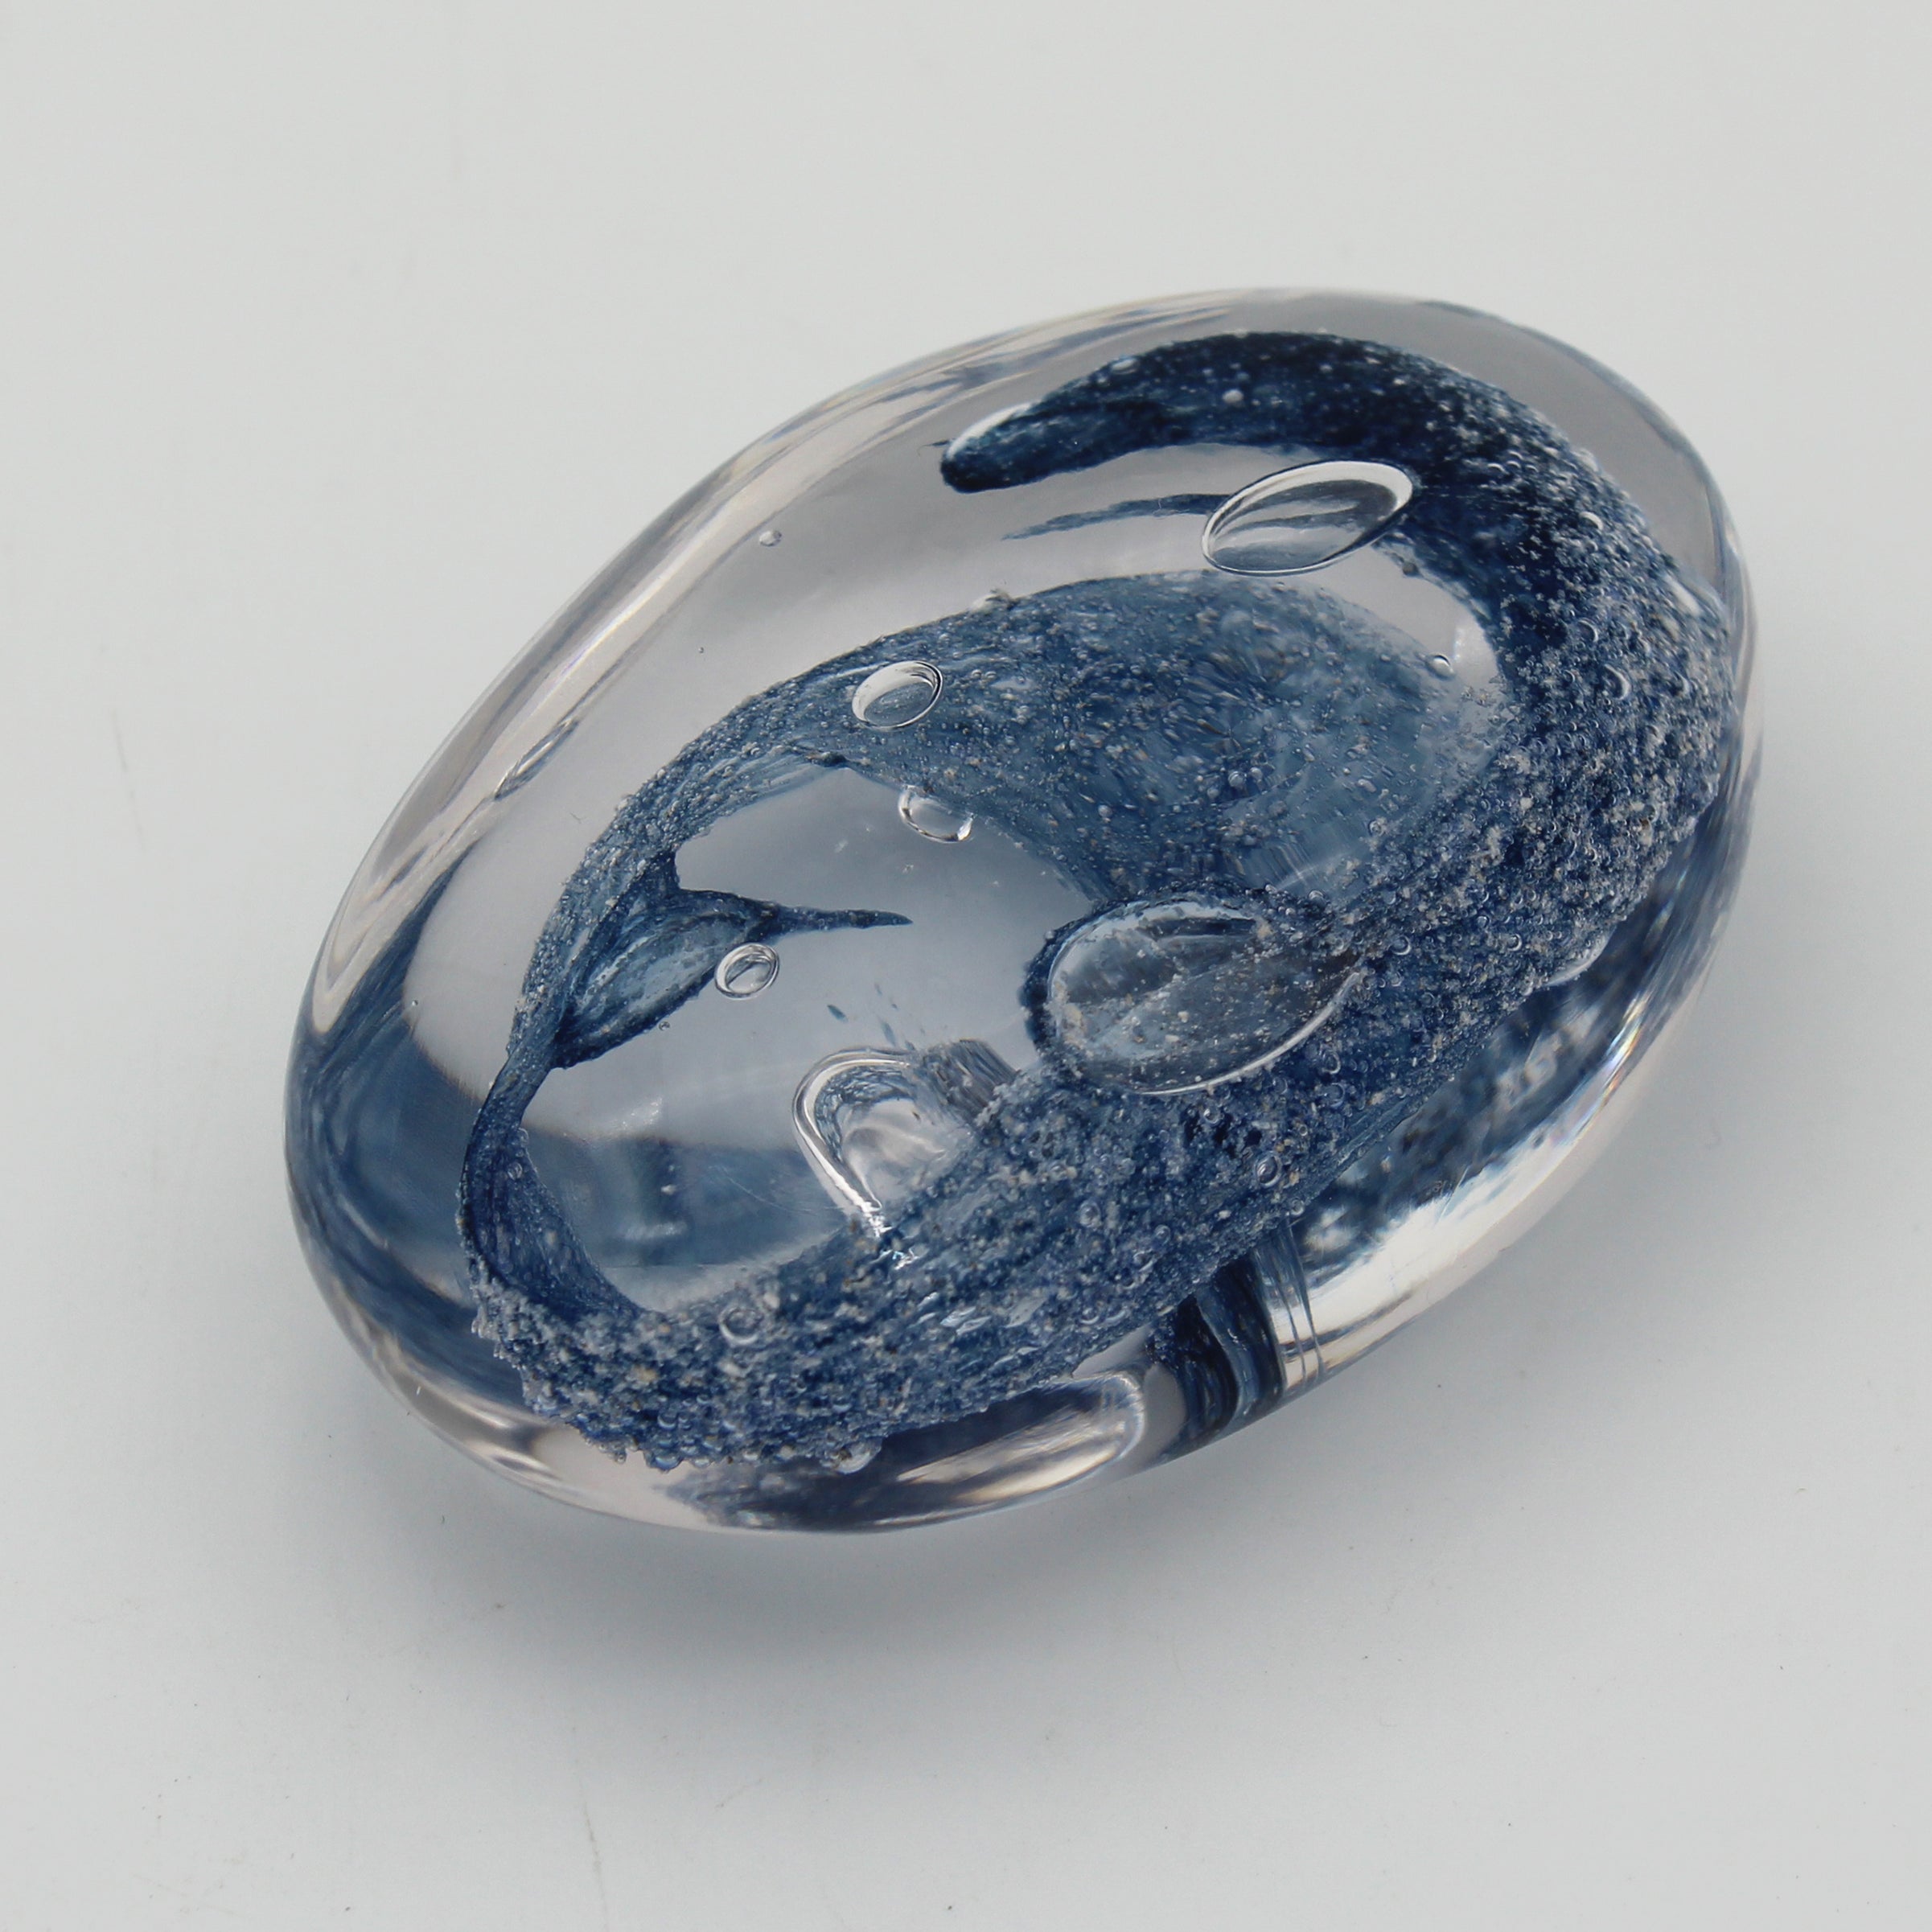 River Stone - Eternalglass - Glass Art - Kingston Glass Studio - Blown Glass - Glass Blowing